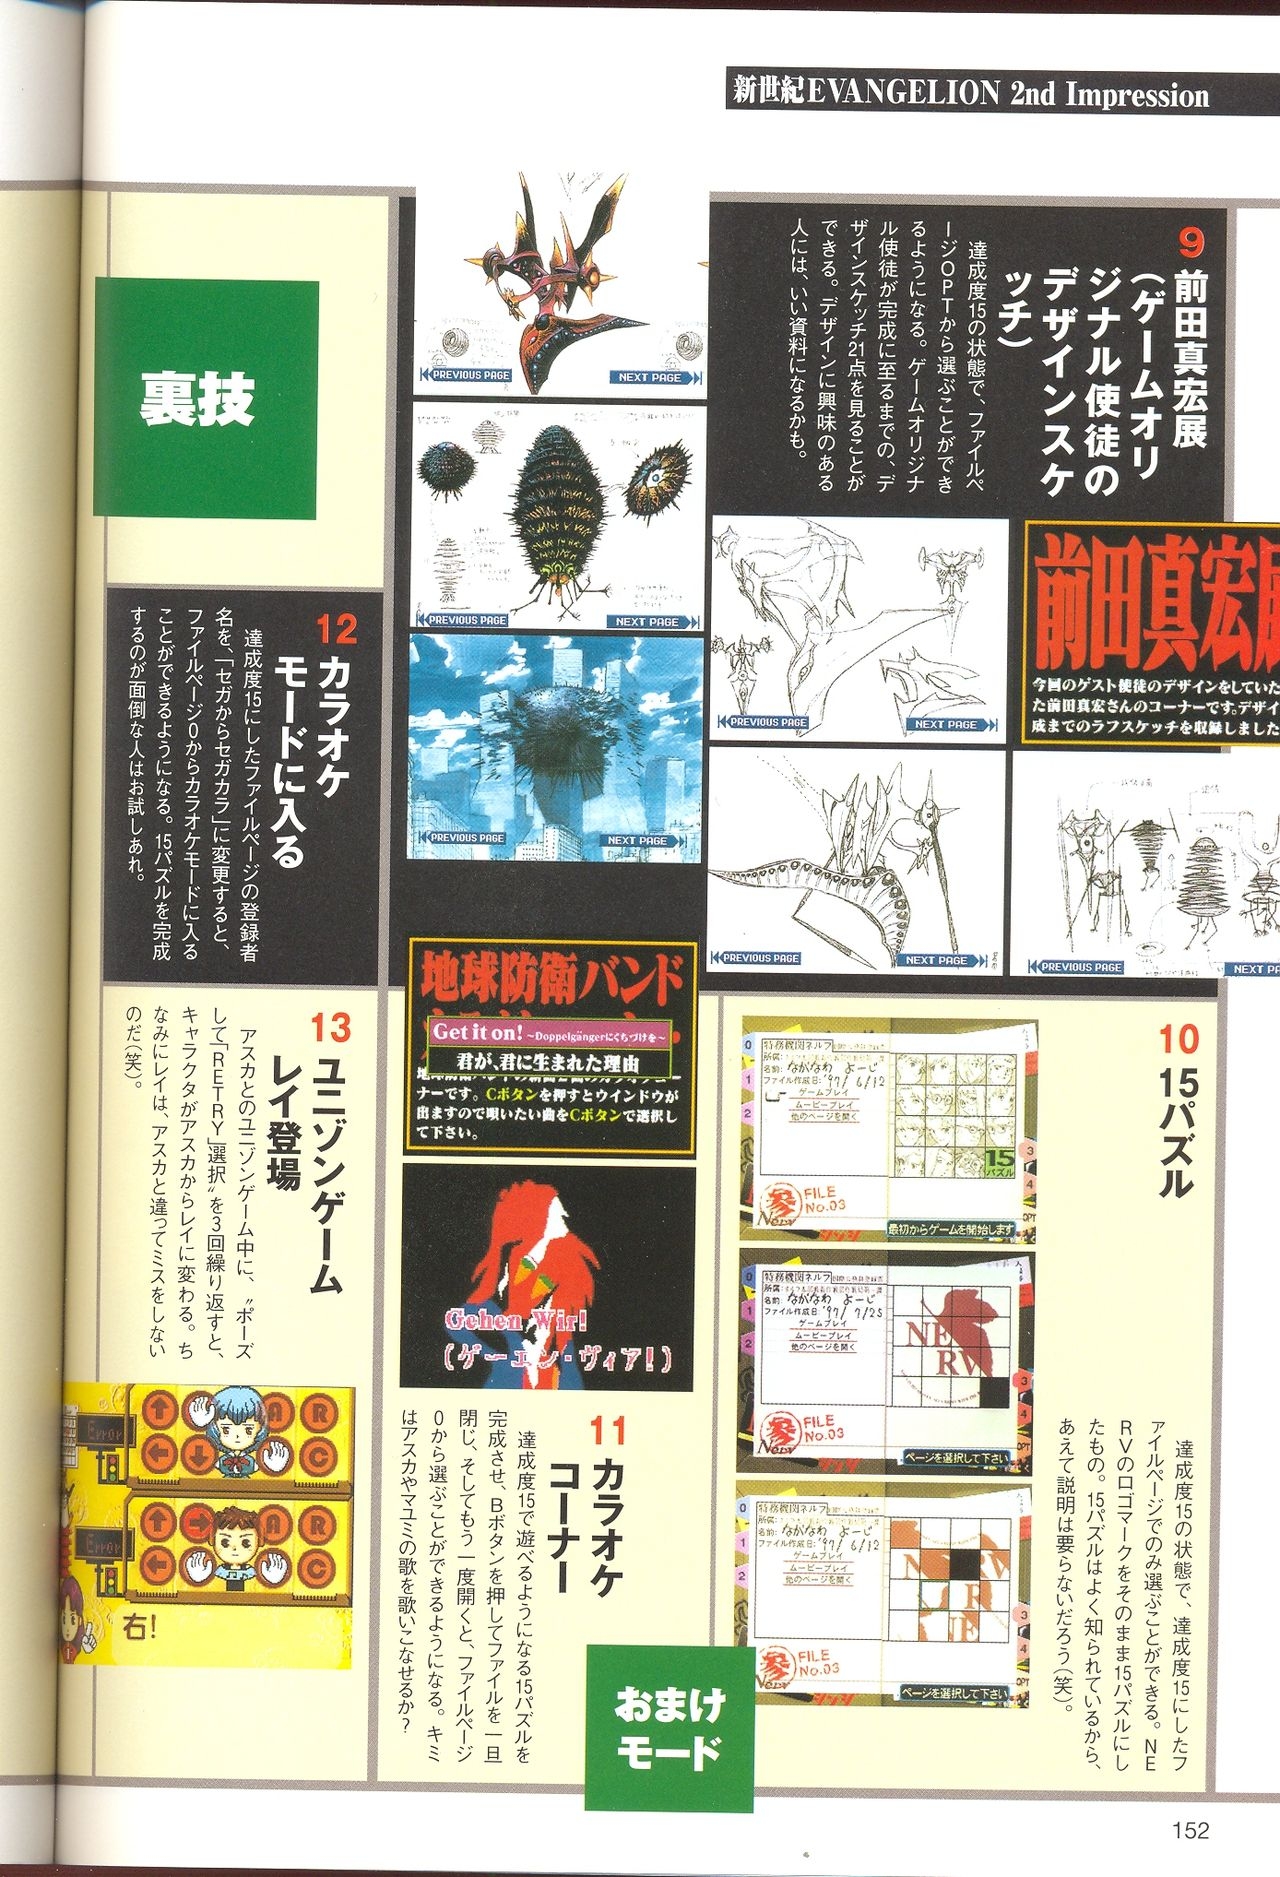 Neon Genesis Evangelion - 2nd Impression Sega Saturn Perfect Guide 151